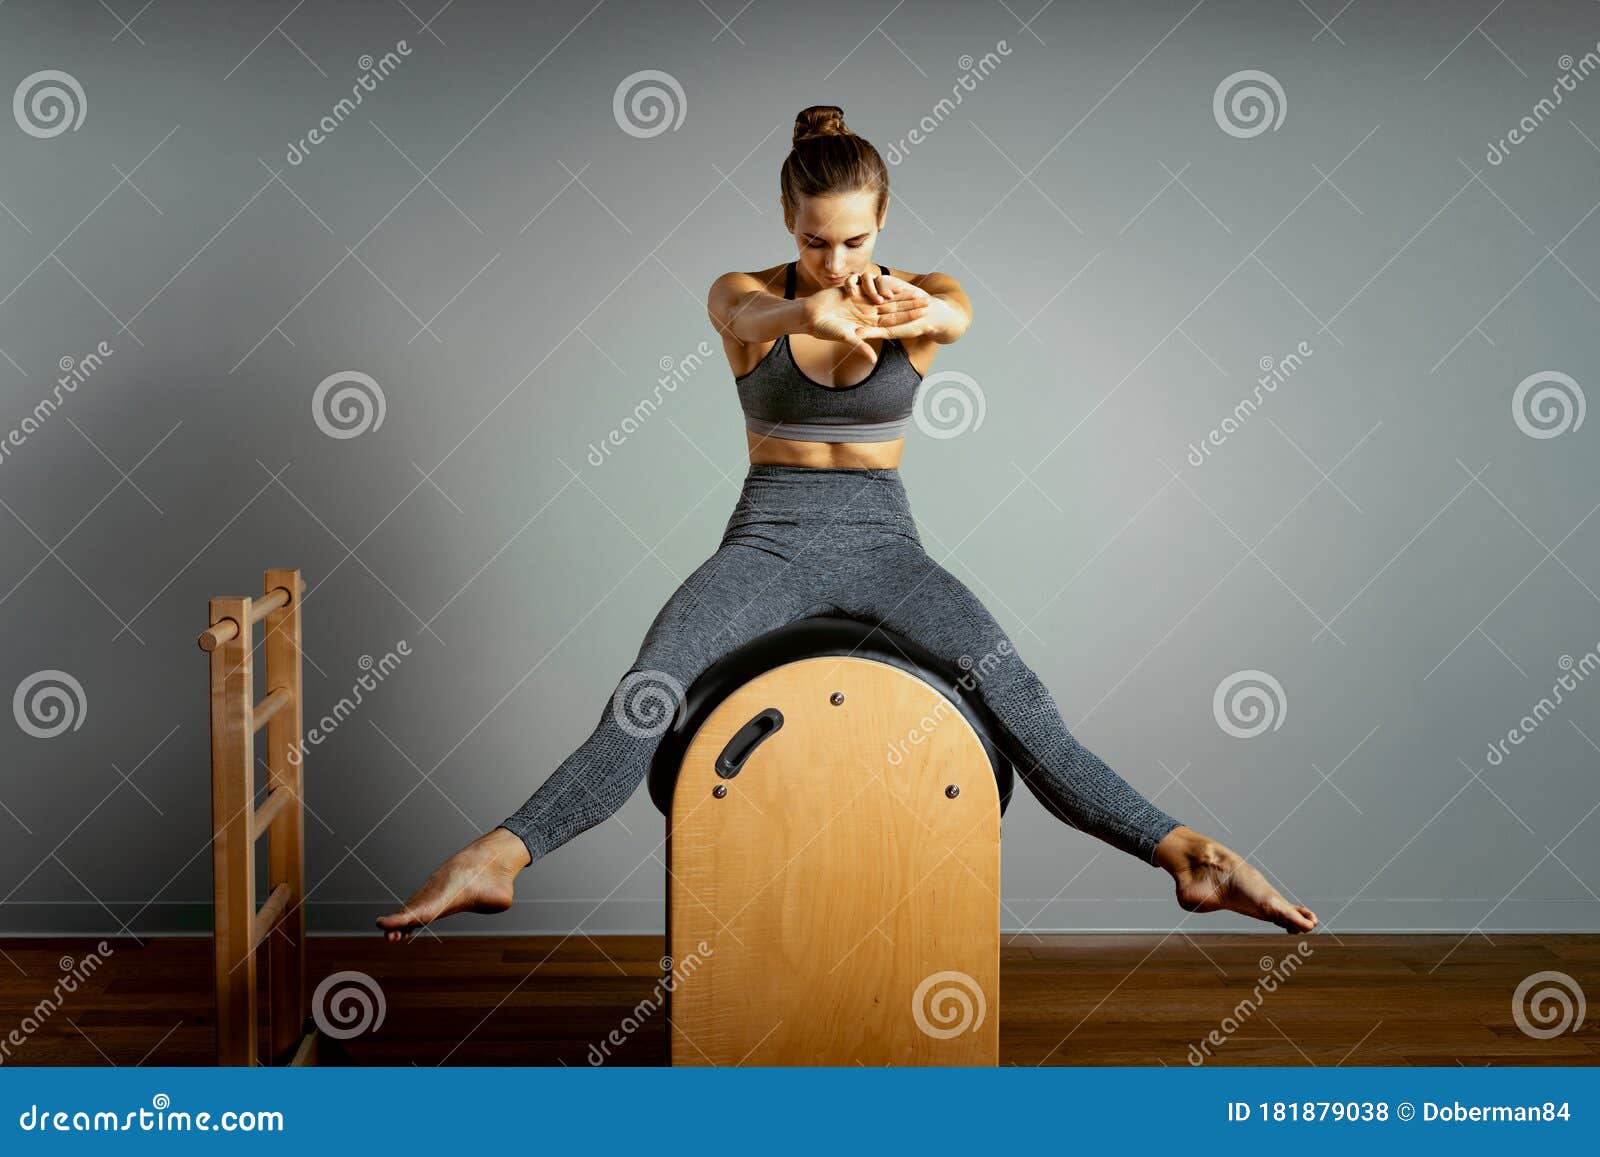 Pilates trainer exercises on a pilates barrel. Body training